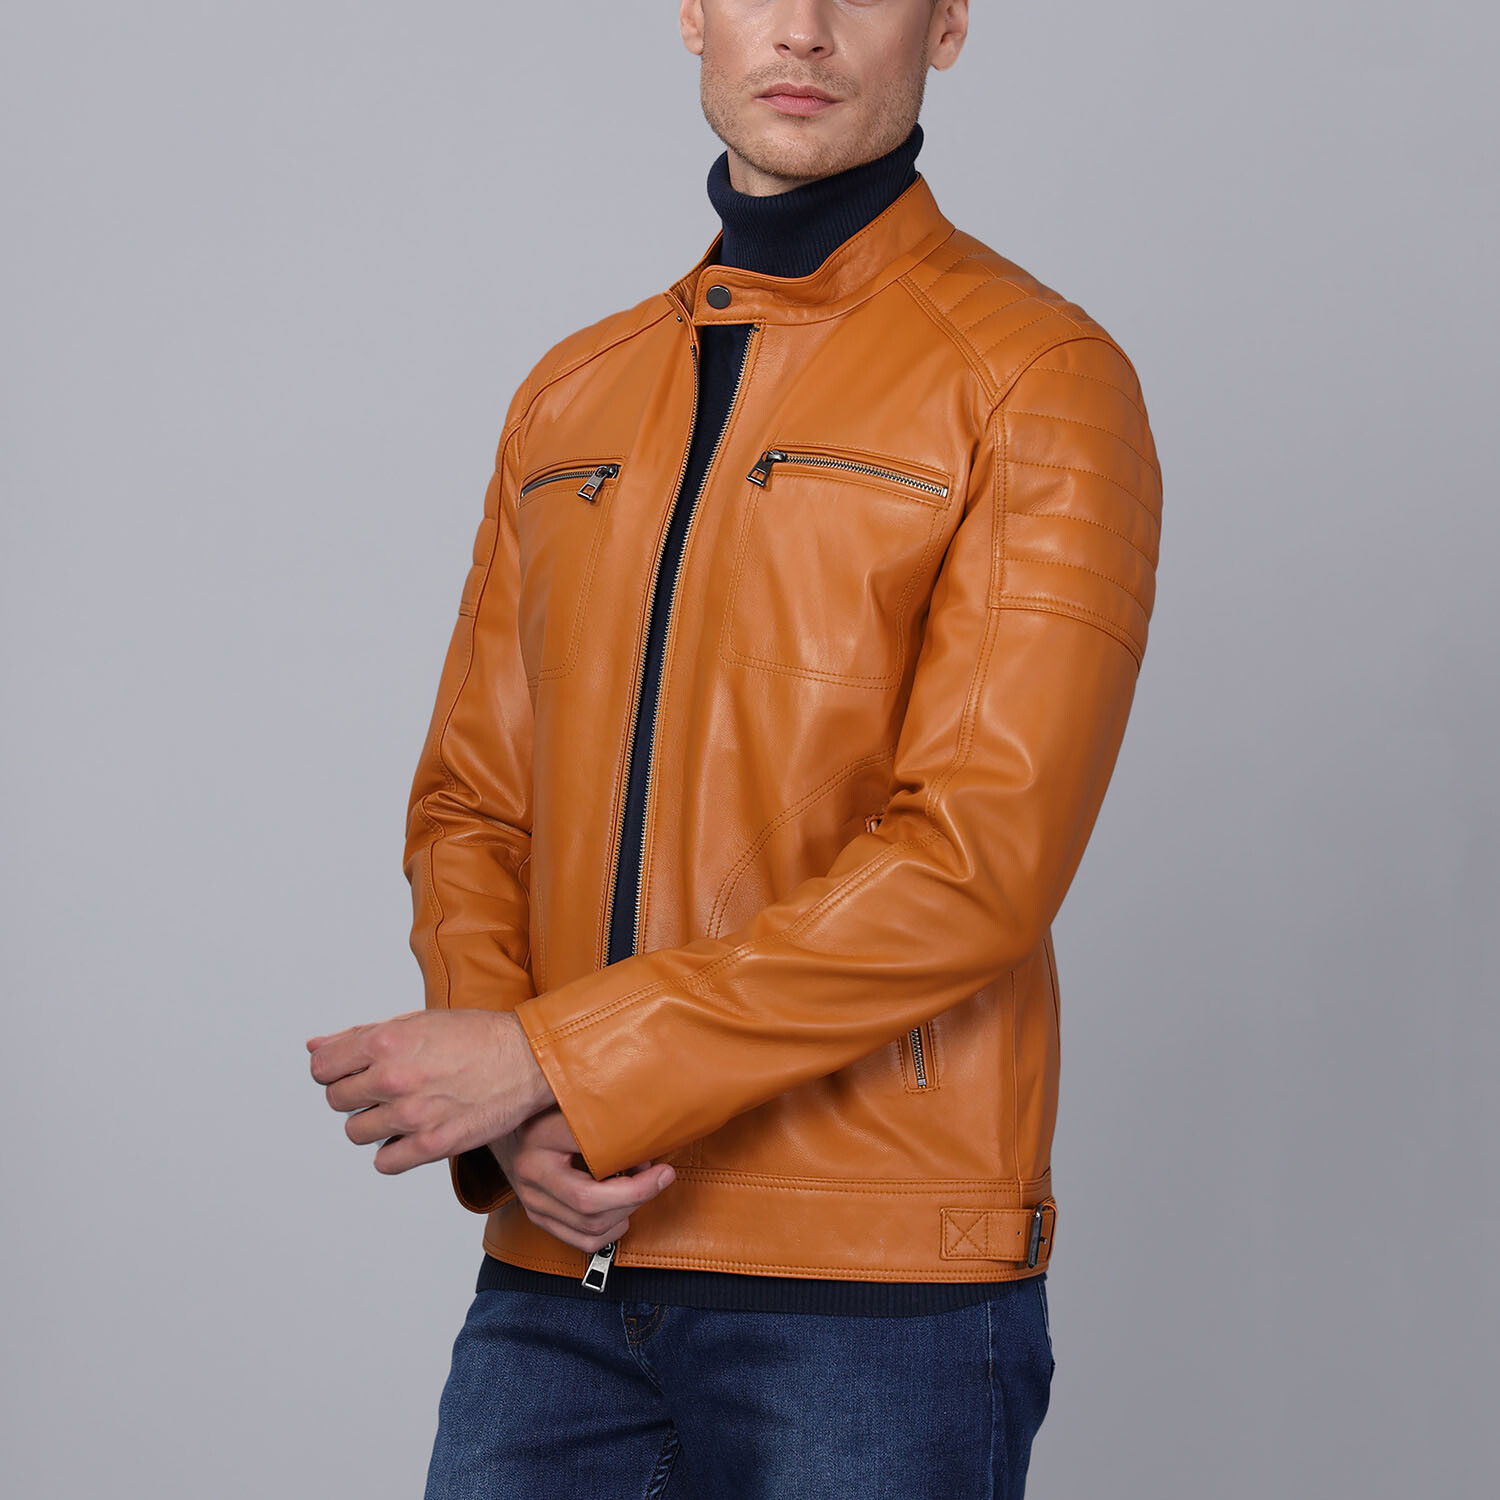 Ocean Leather Jacket // Camel (XL) - Basics&More Leather Jackets ...